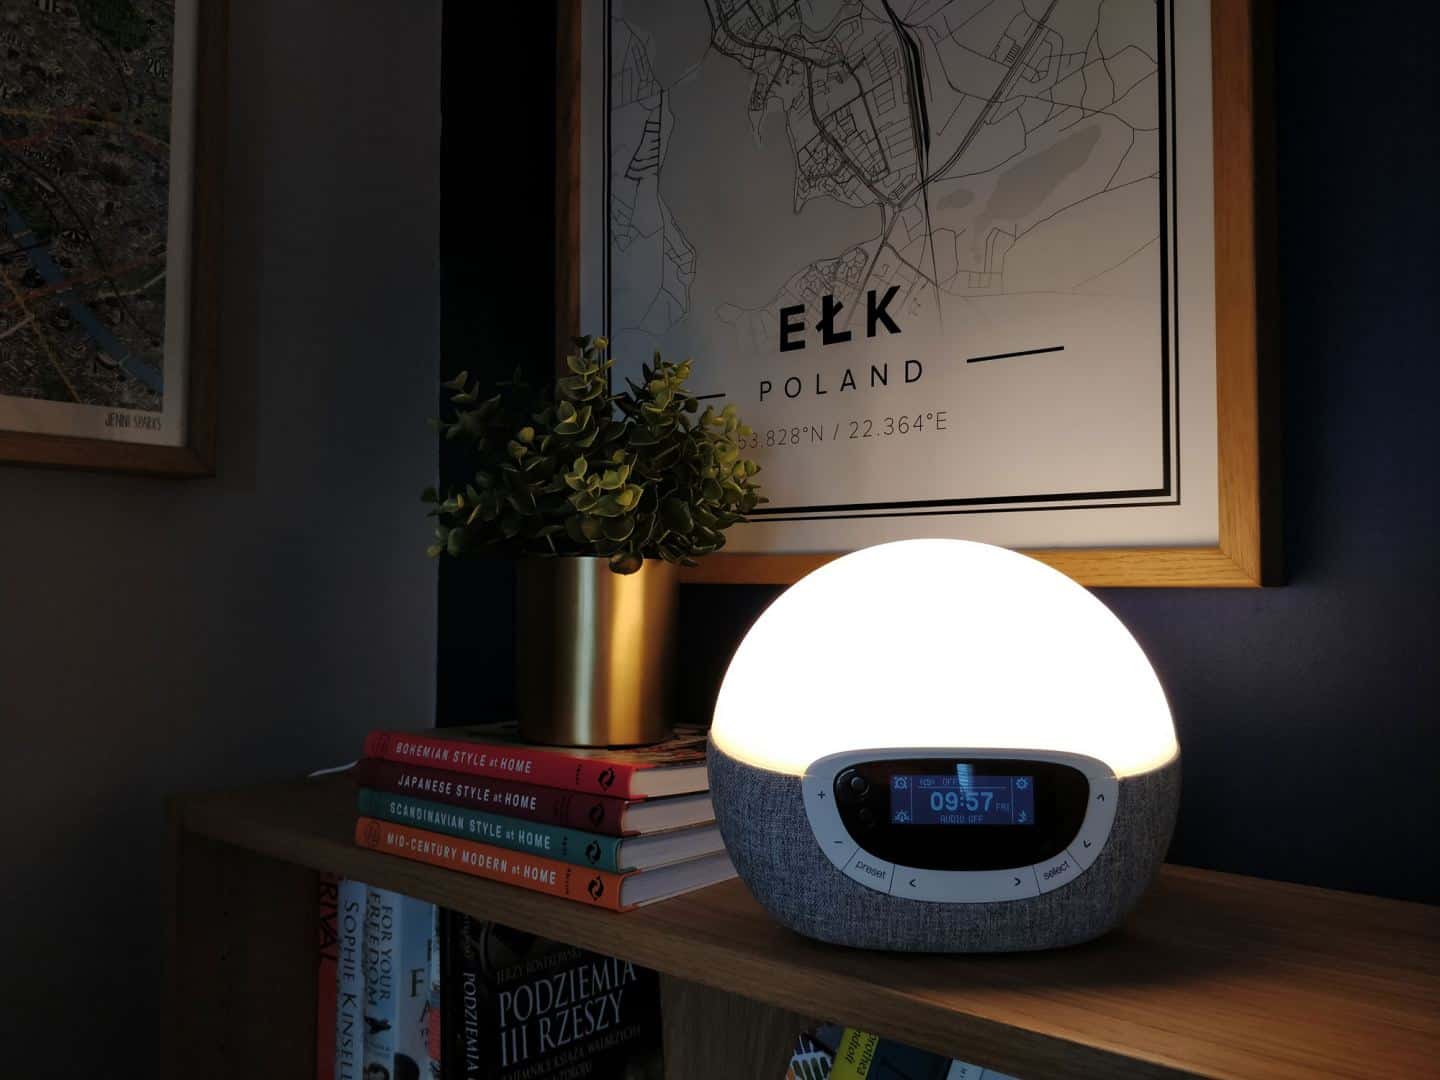 World Sleep Day 2020-5 Ways to Improve your Sleep. A Lumie Wake-up light alarm clock on a shelf